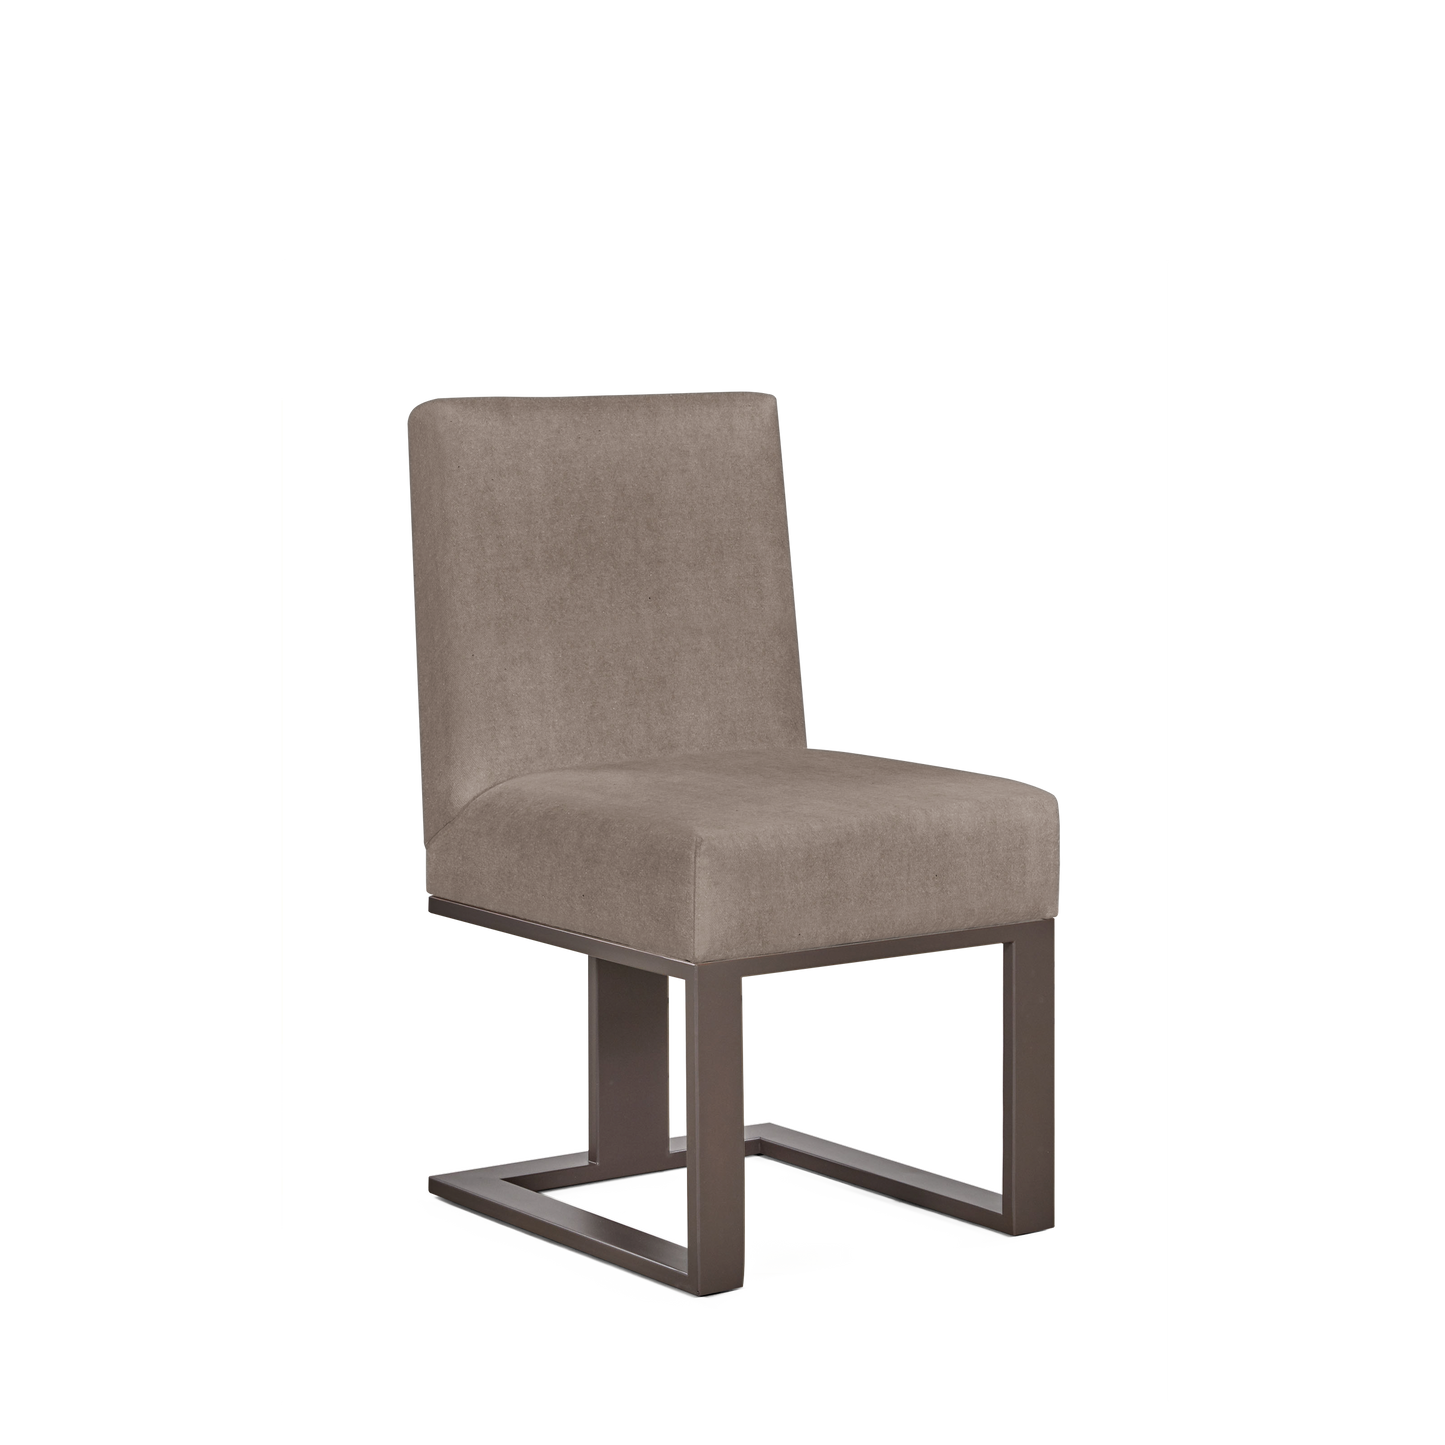 Len chair with London grey textile and moka wood legs 